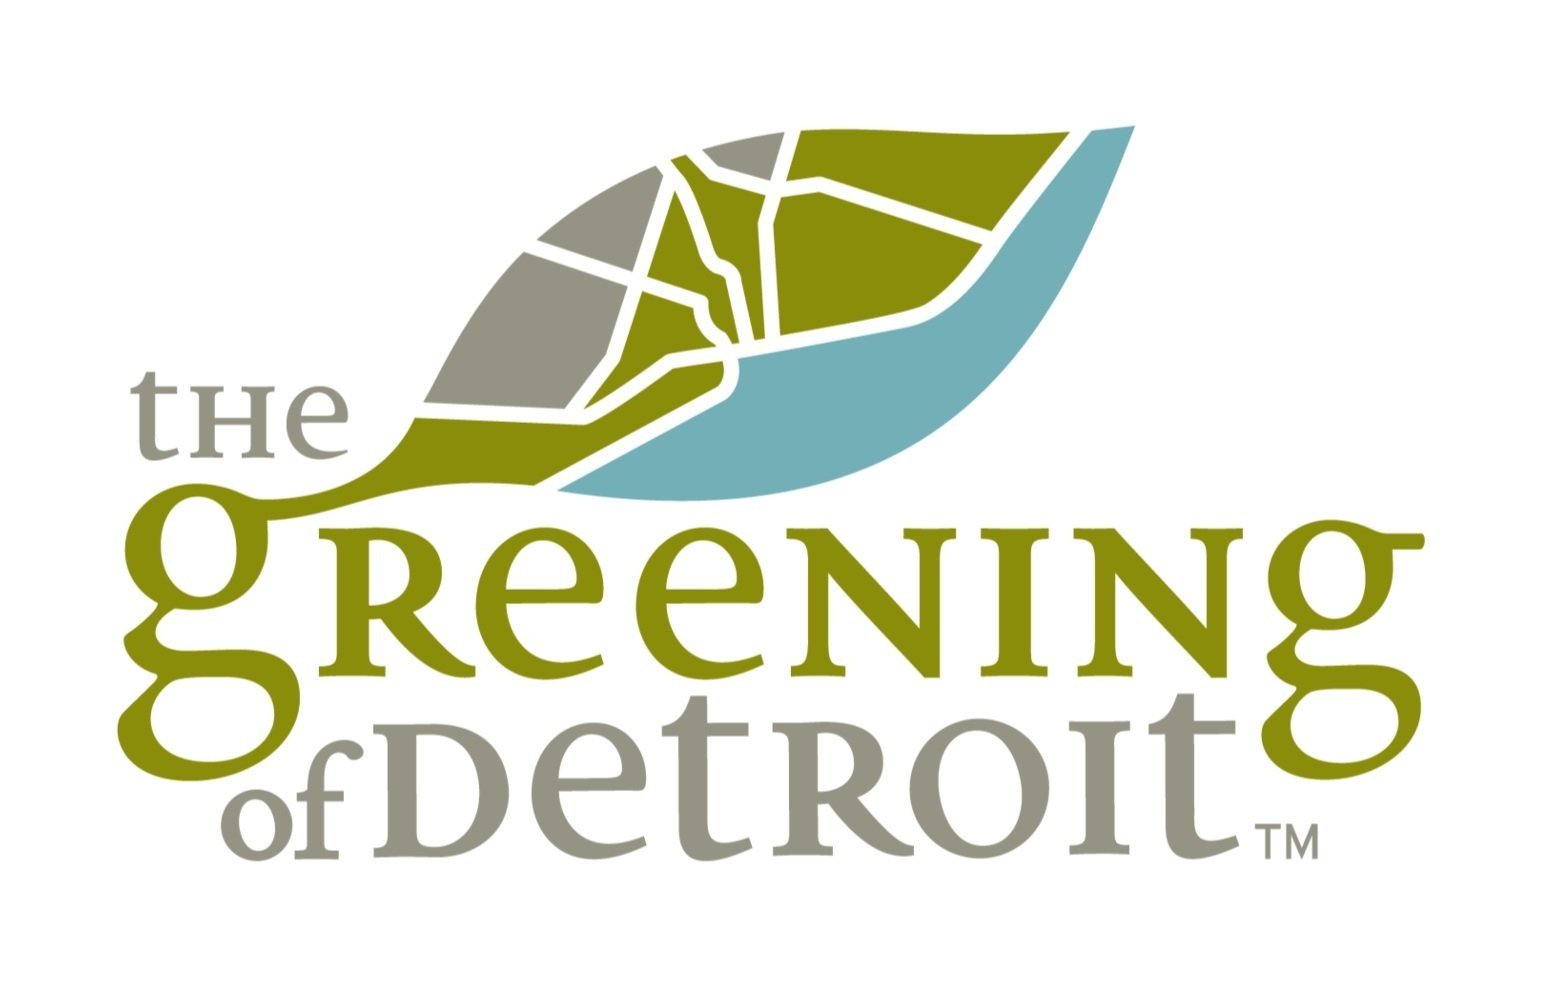 The Greening of Detroit